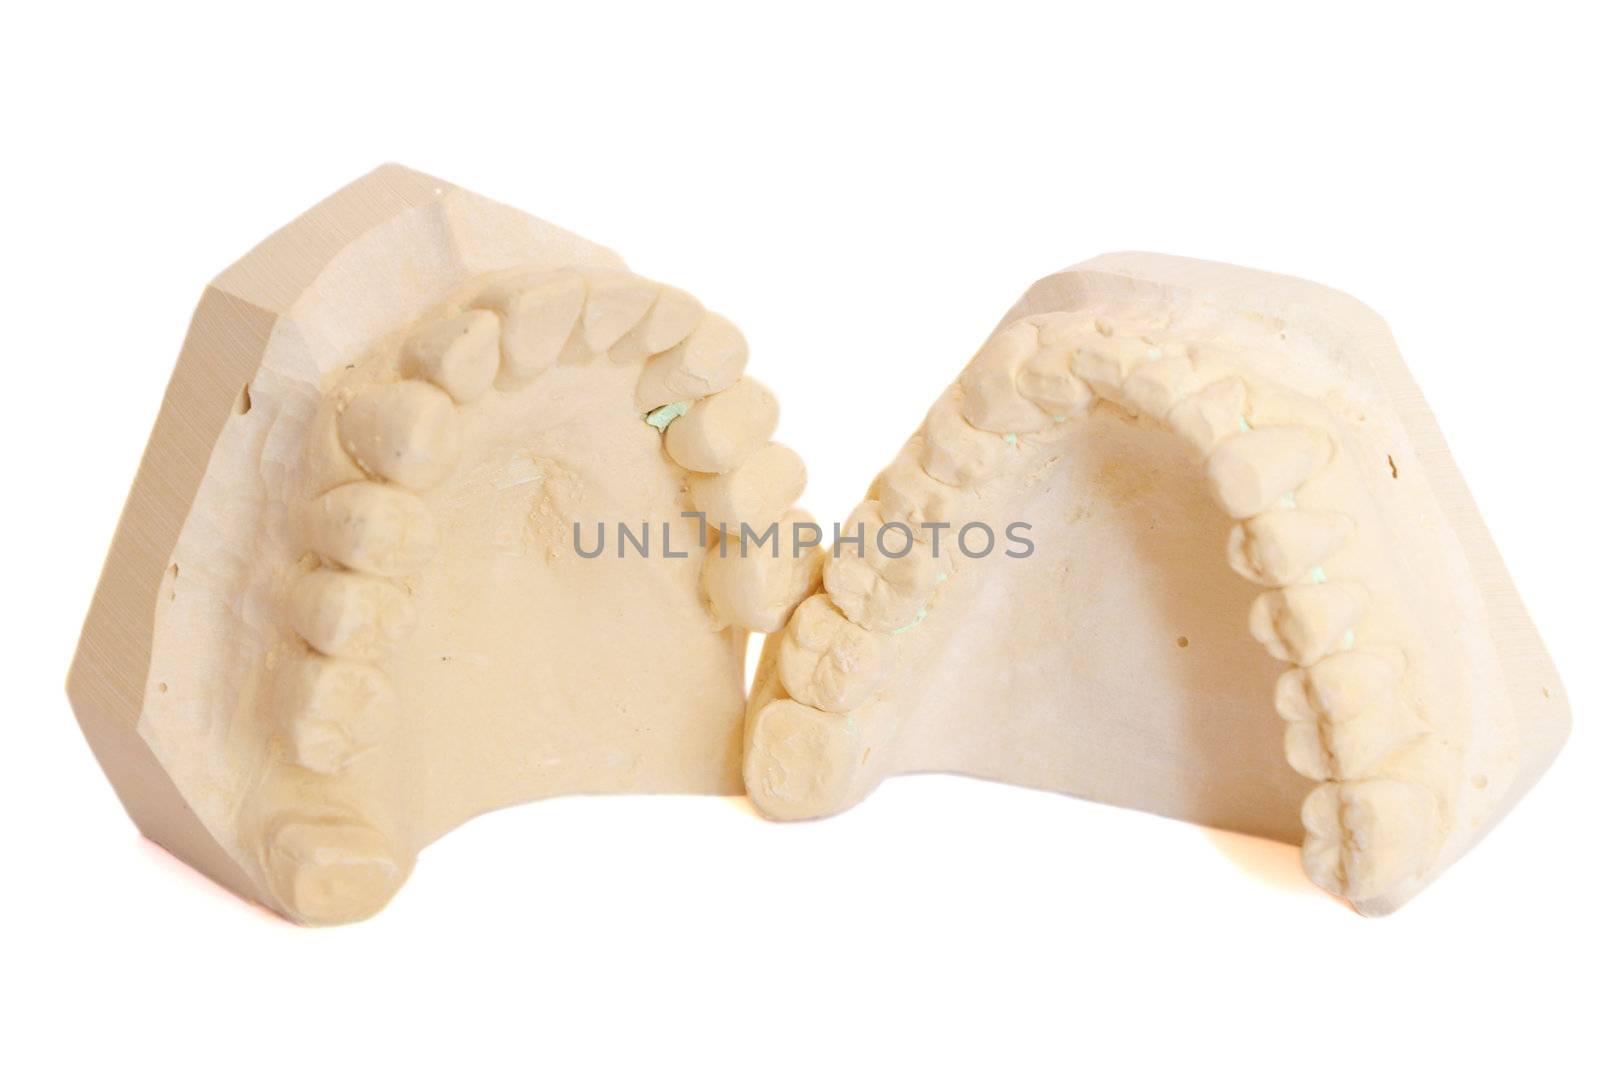 dental impression isolated against white background